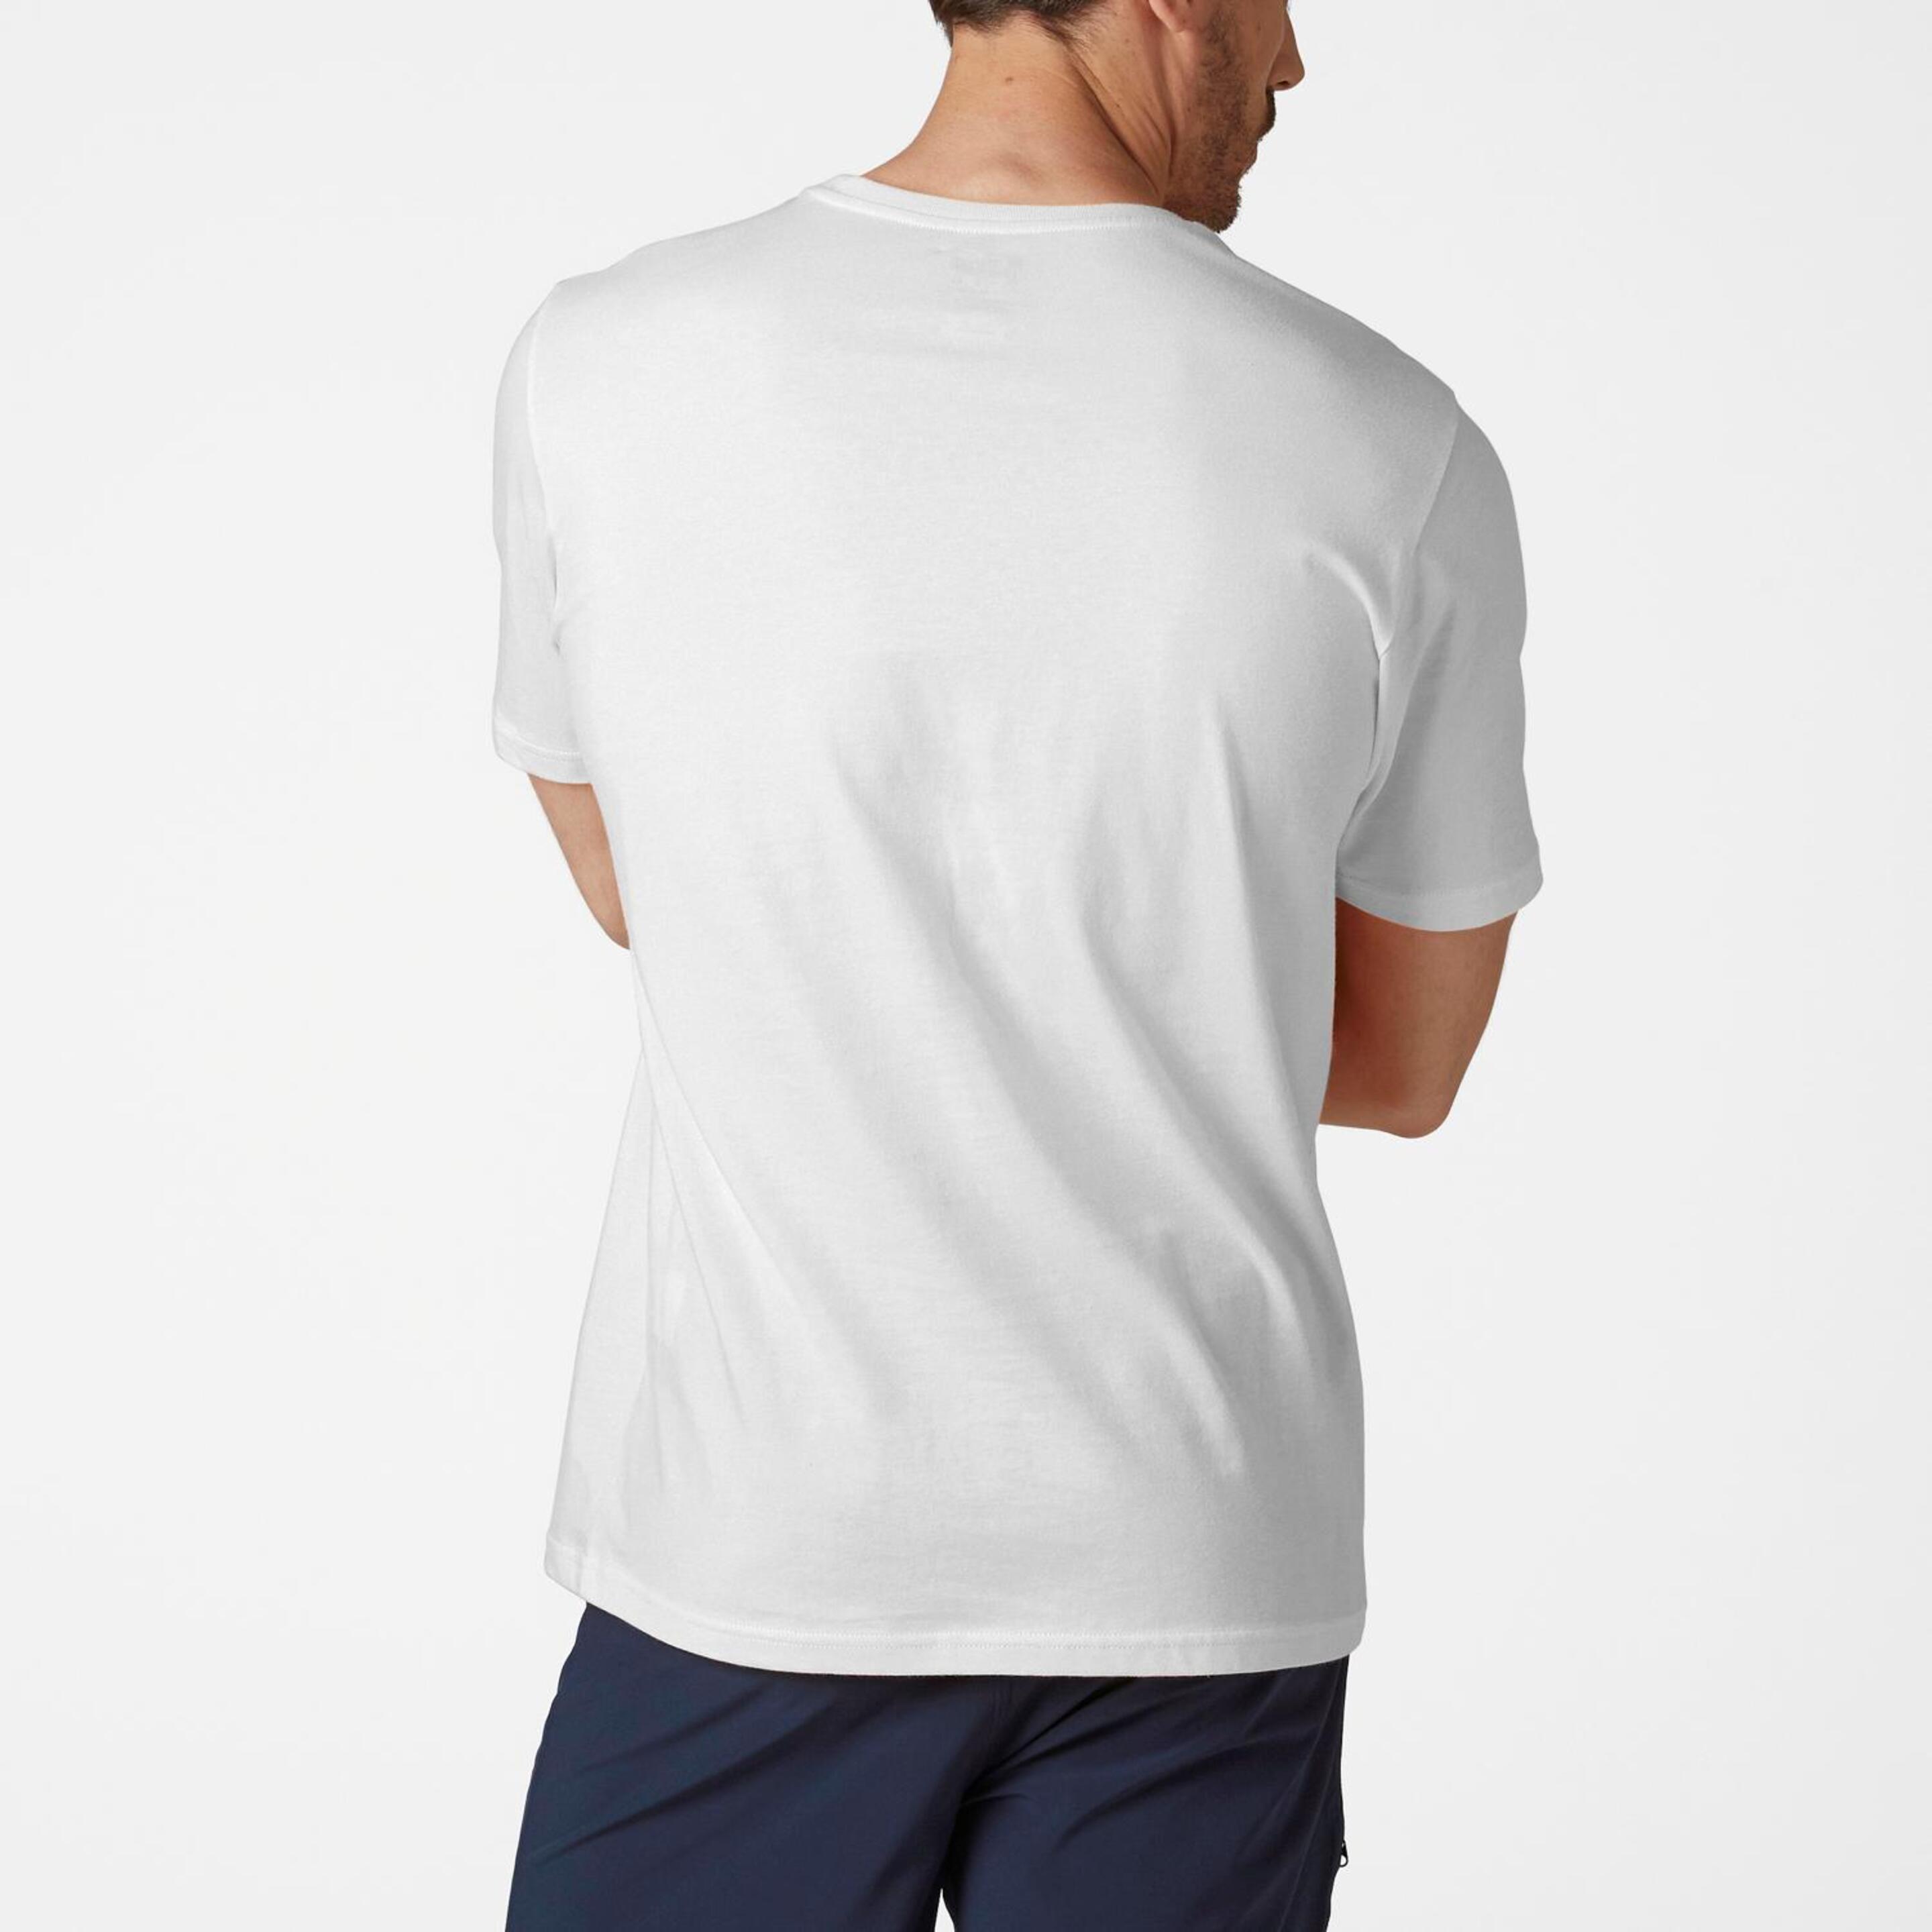 Helly Hansen HO - Blanco - Camiseta Montaña Hombre  MKP